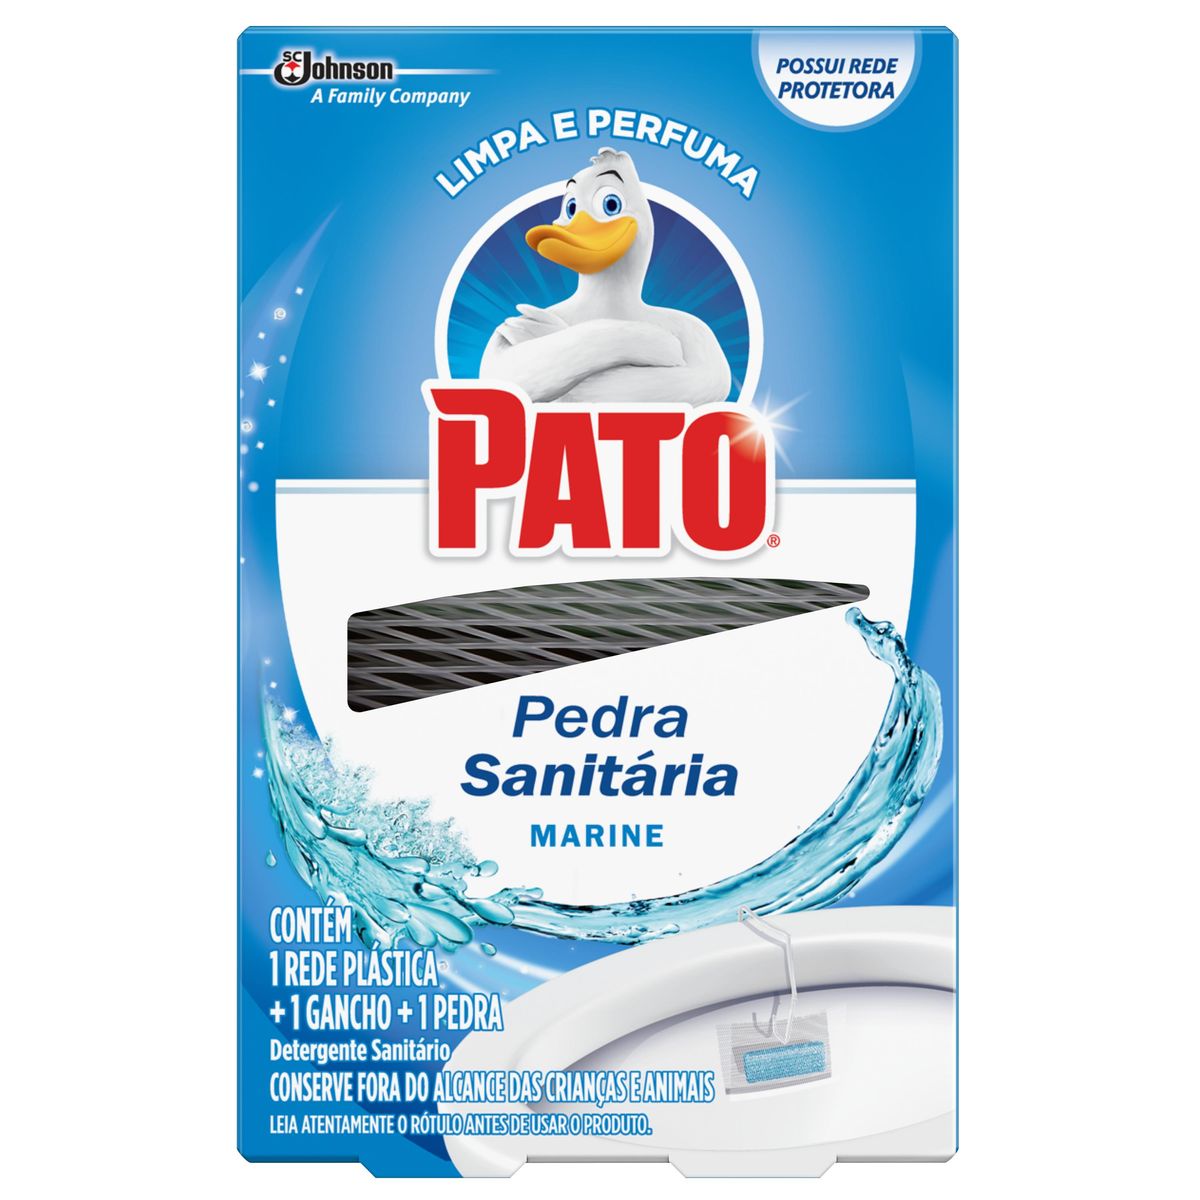 Detergente Sanitário Pato Pedra Marine